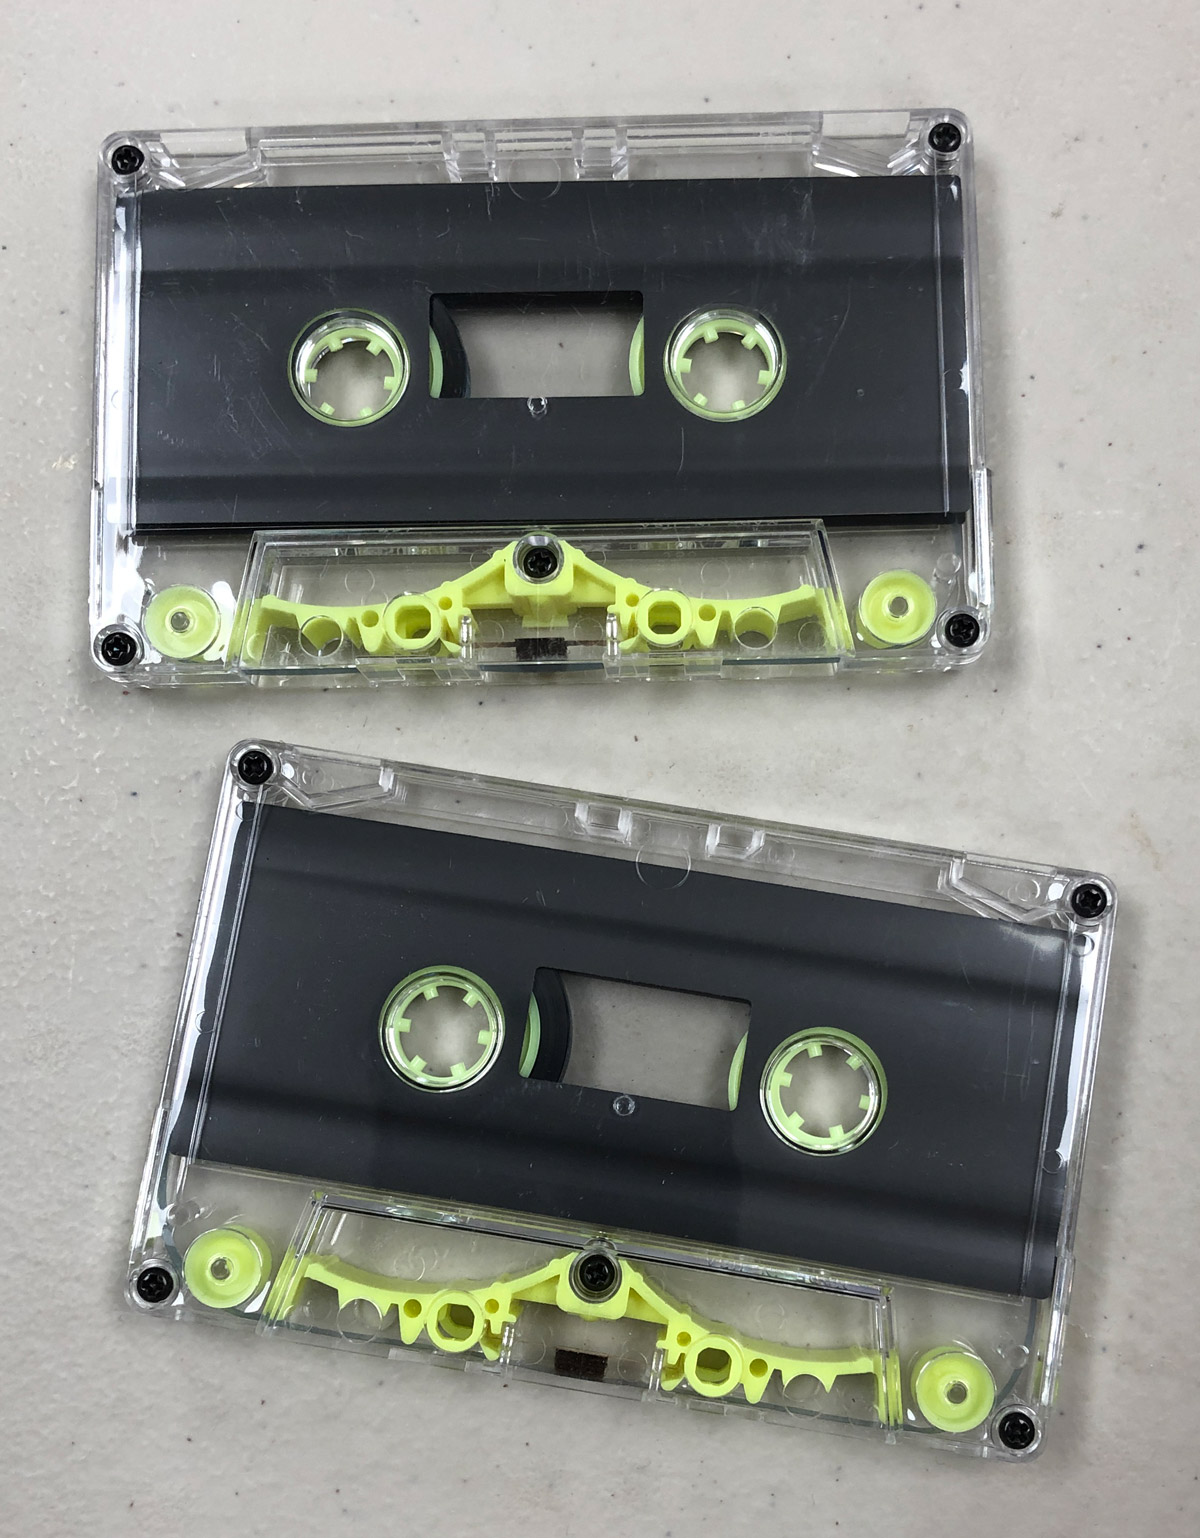 Maxell XLII-S C-10 Audio Cassette Tape in Hi-Def Cassette Shell -  Pre-Loaded Type II Cassettes - Audio Cassettes 